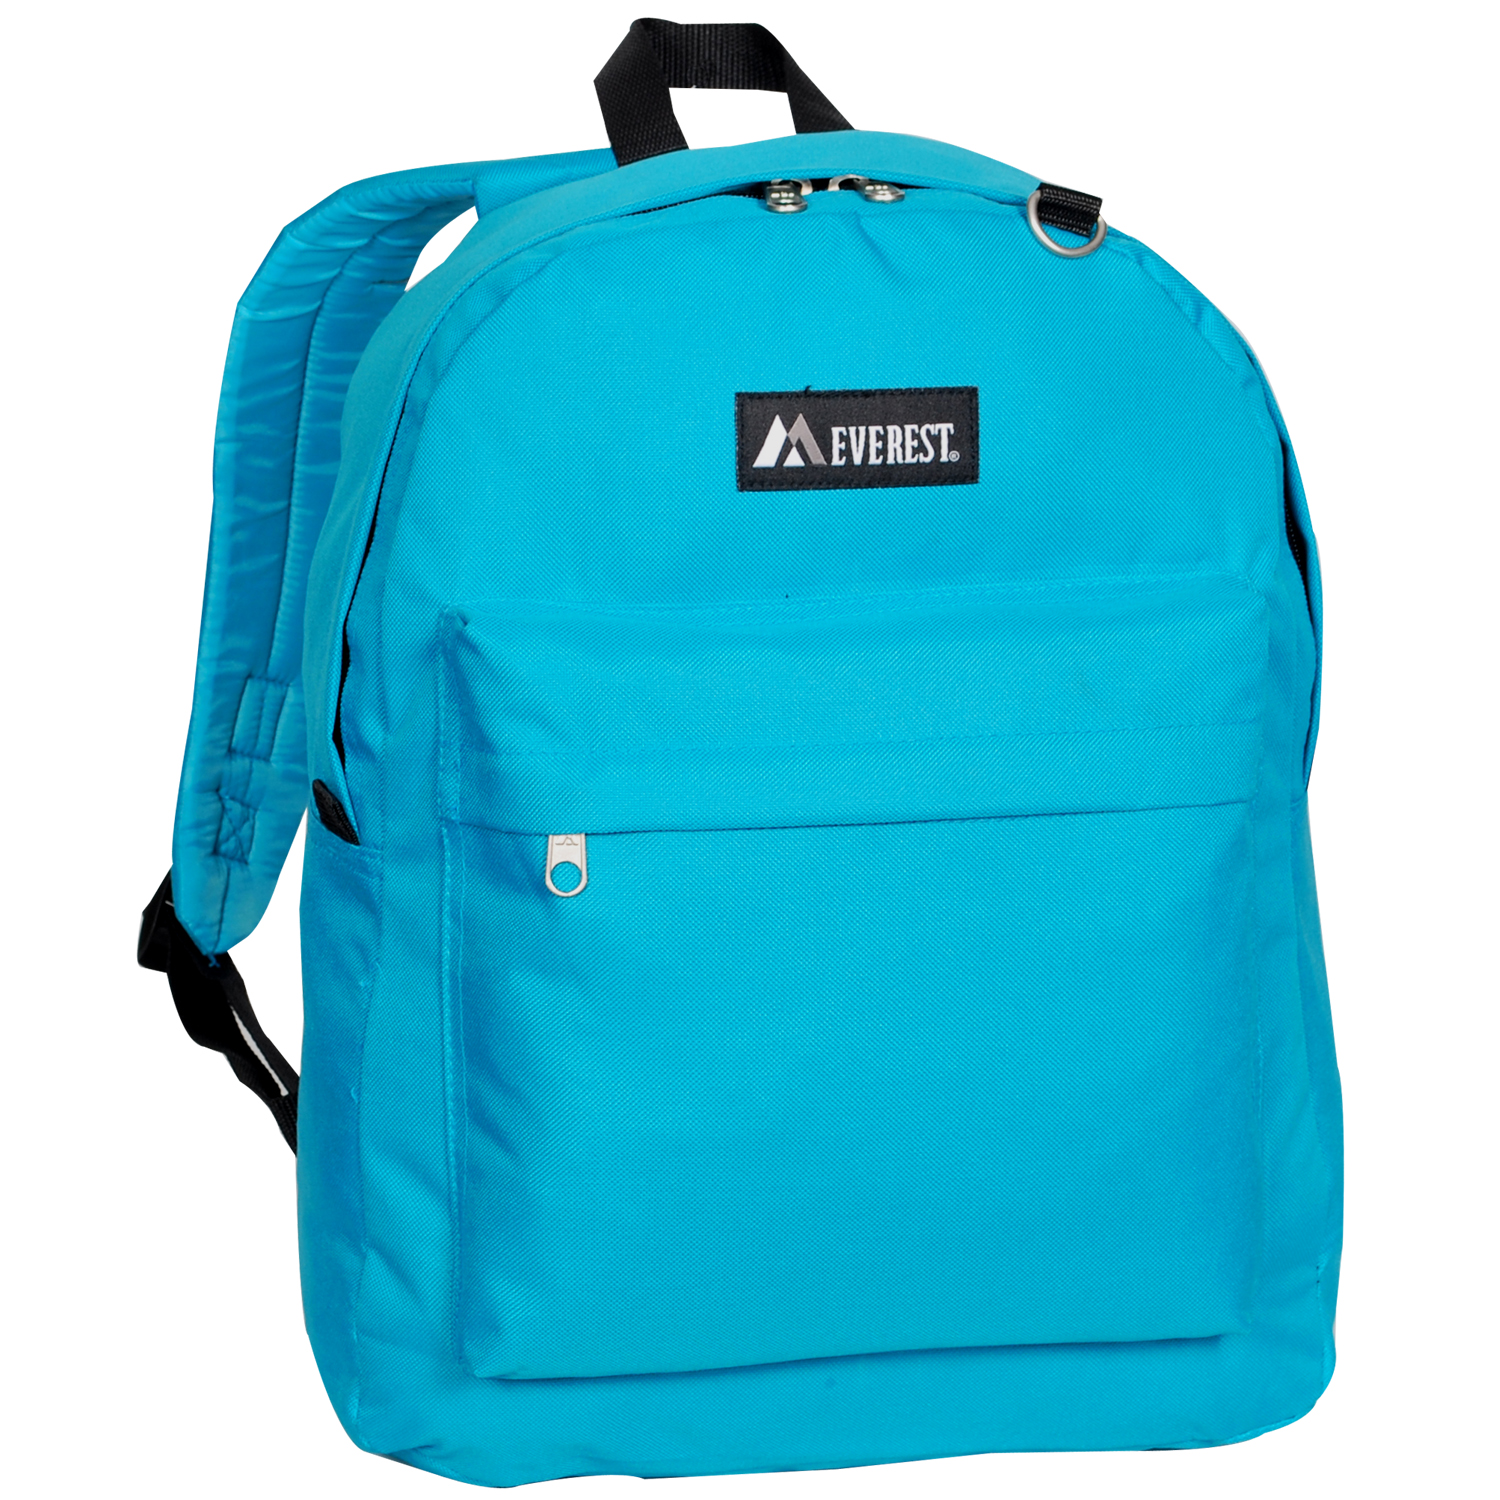 Everest Unisex Classic School Backpack 16" Turquoise - image 1 of 2